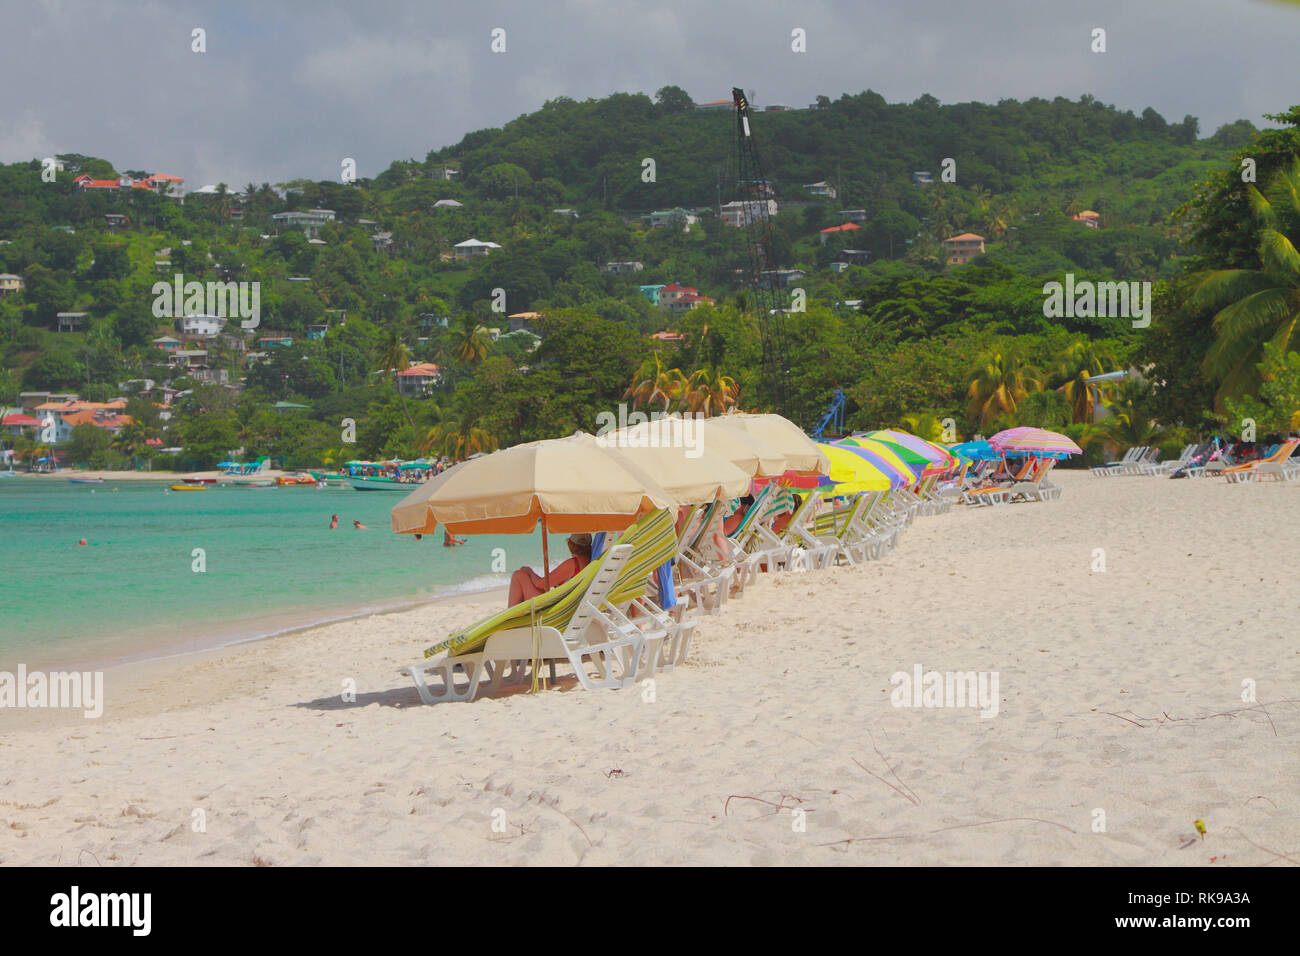 Sun beds and umbrellas on sand beach. St. George's, Grenada Stock Photo